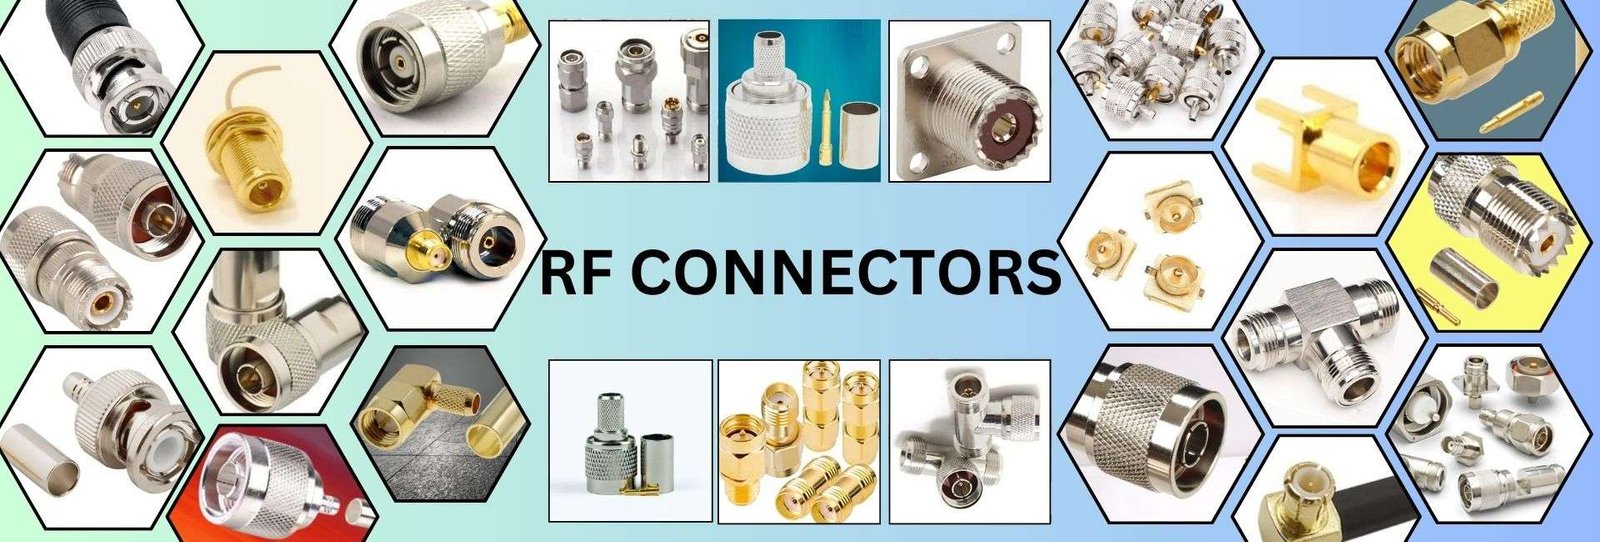 9_RF CONNECTORS.jpg